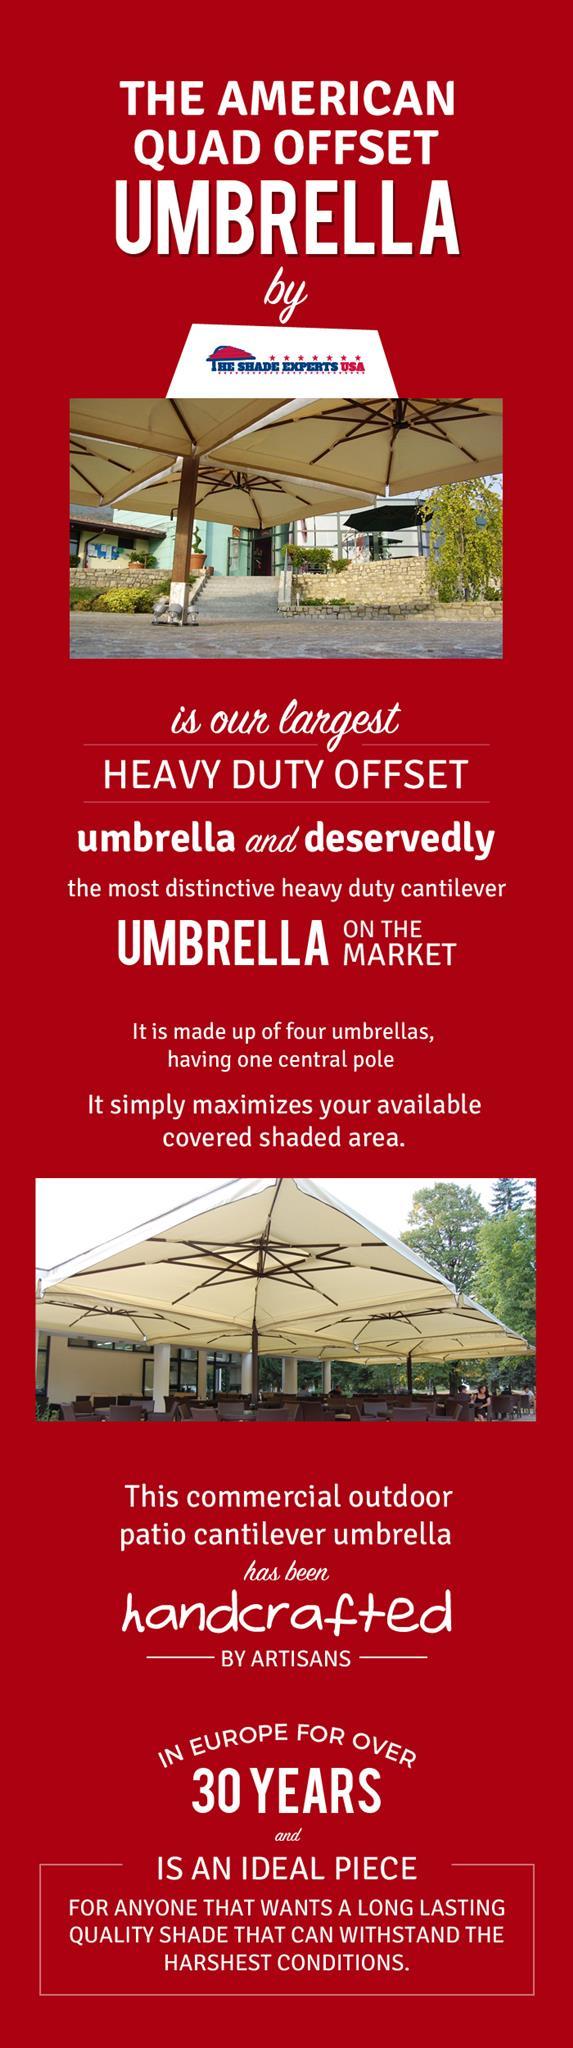 The American Quad Offset Umbrella - The Largest Heavy Duty Offset Umbrella